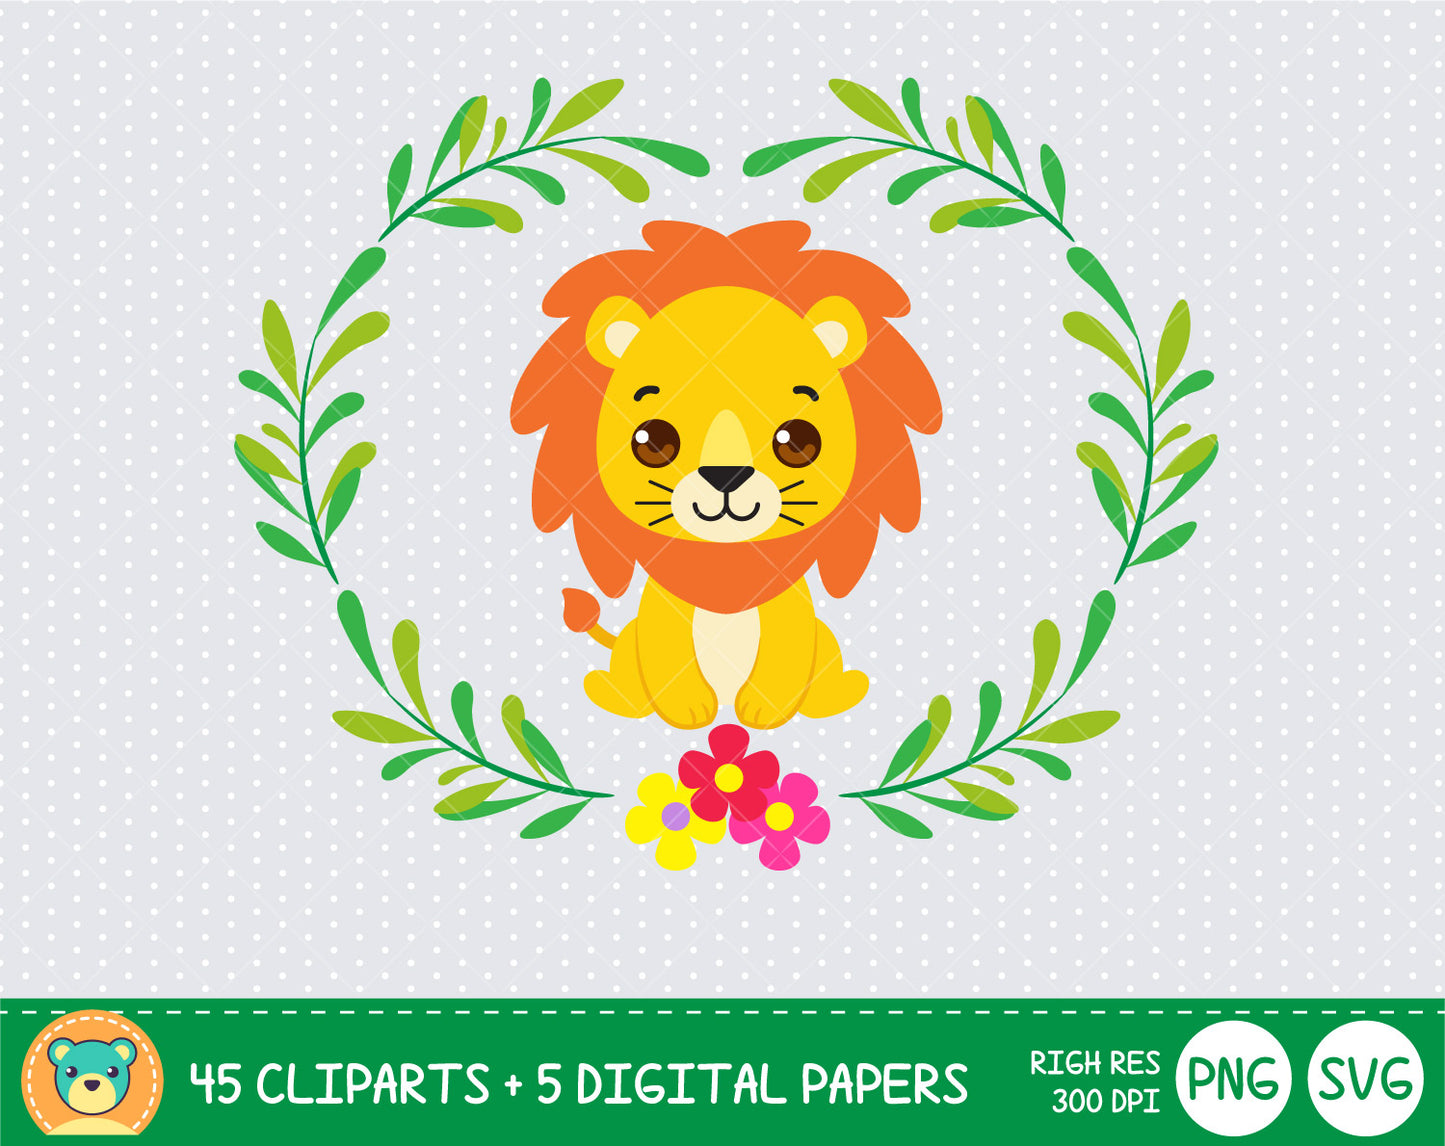 Cute Safari Animals clipart set, Digital clip art for decoration, scrapbooking, PNG, SVG, instant download